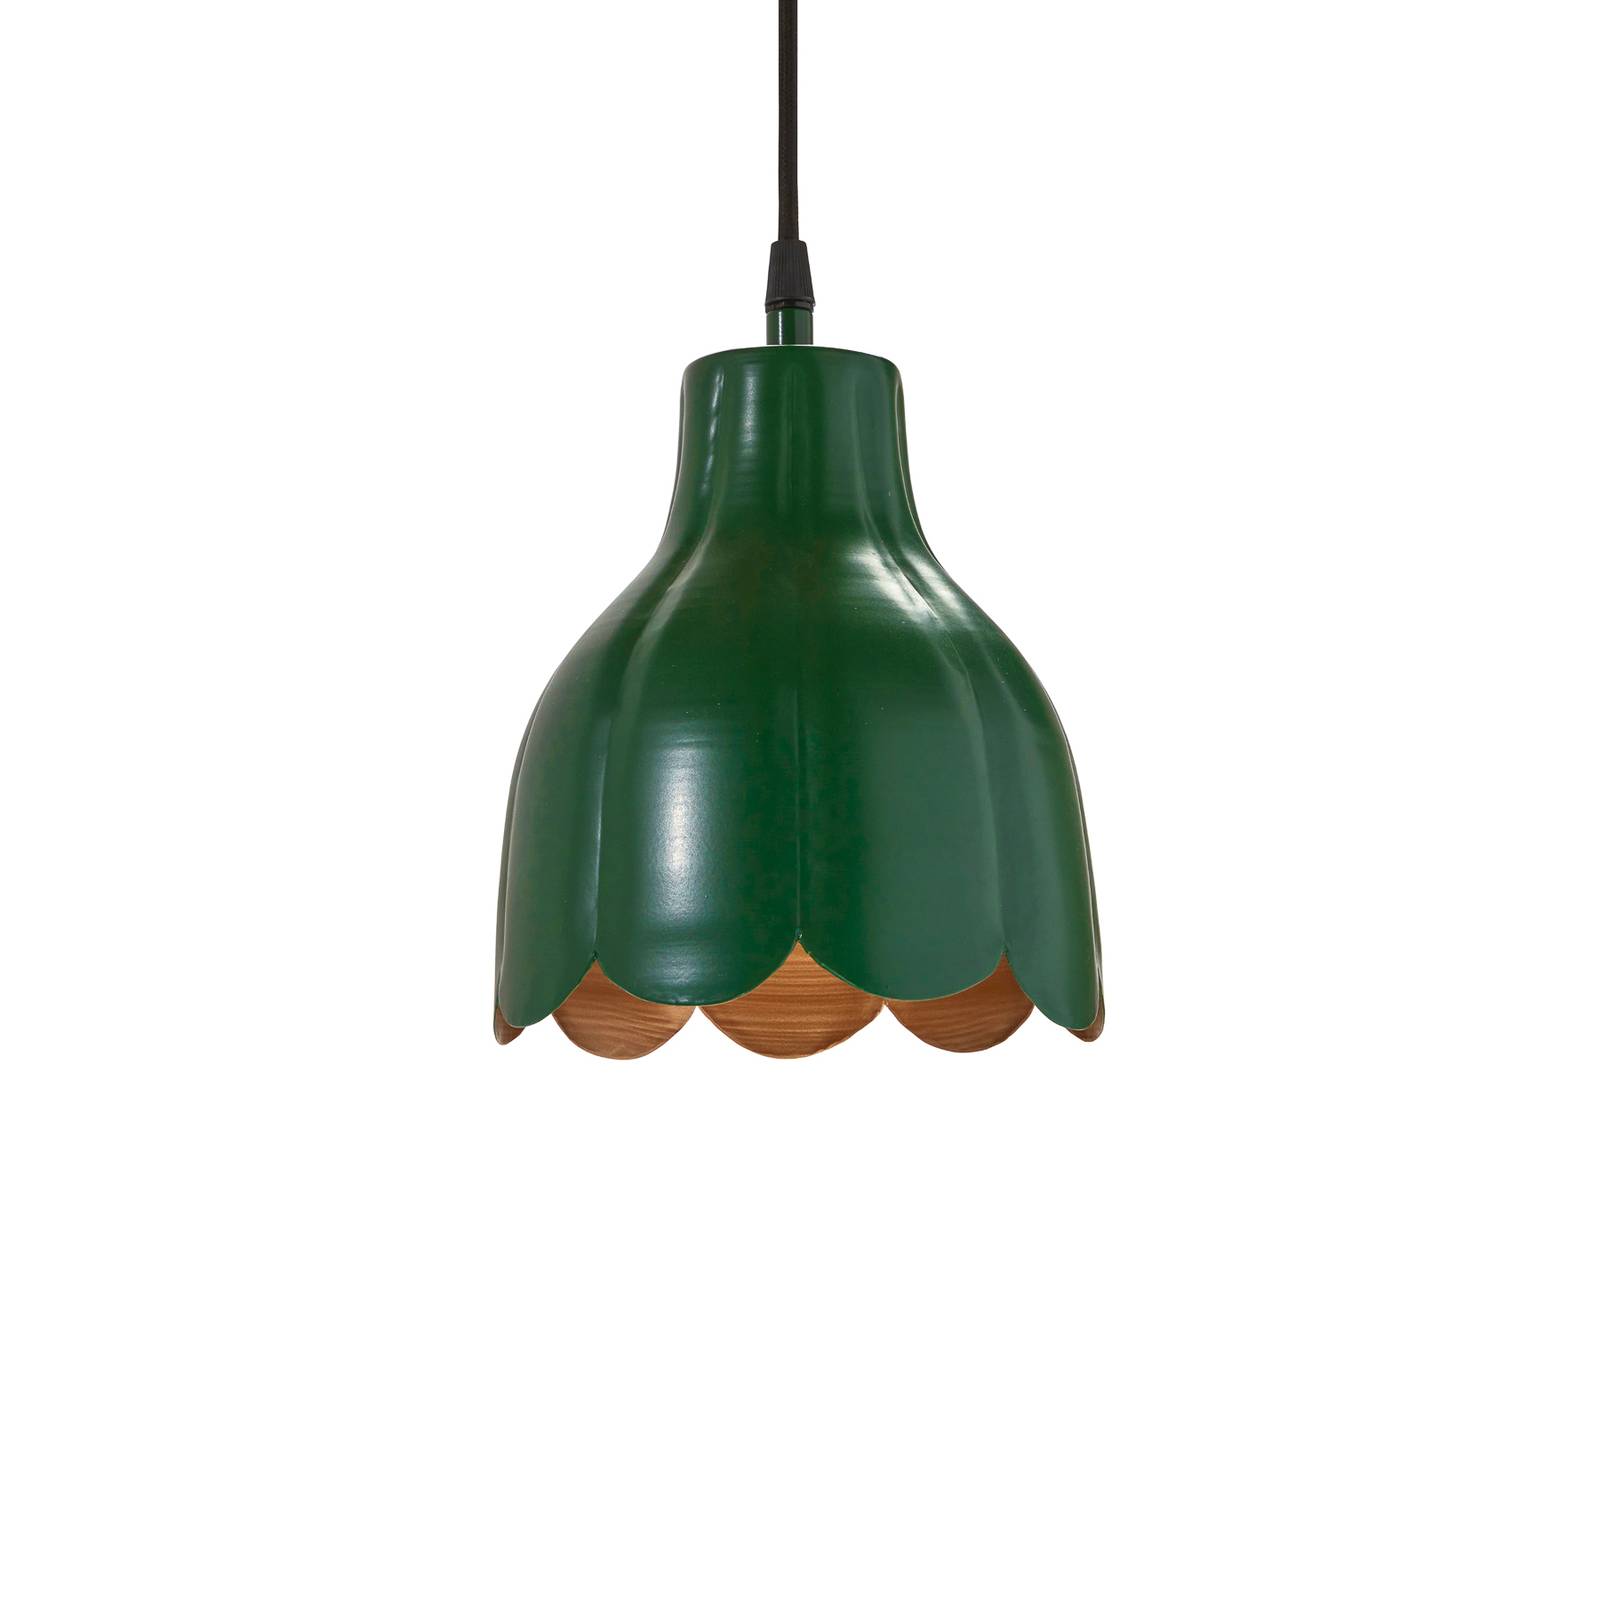 PR Home Tulippa hanglamp Ø 17 cm, groen